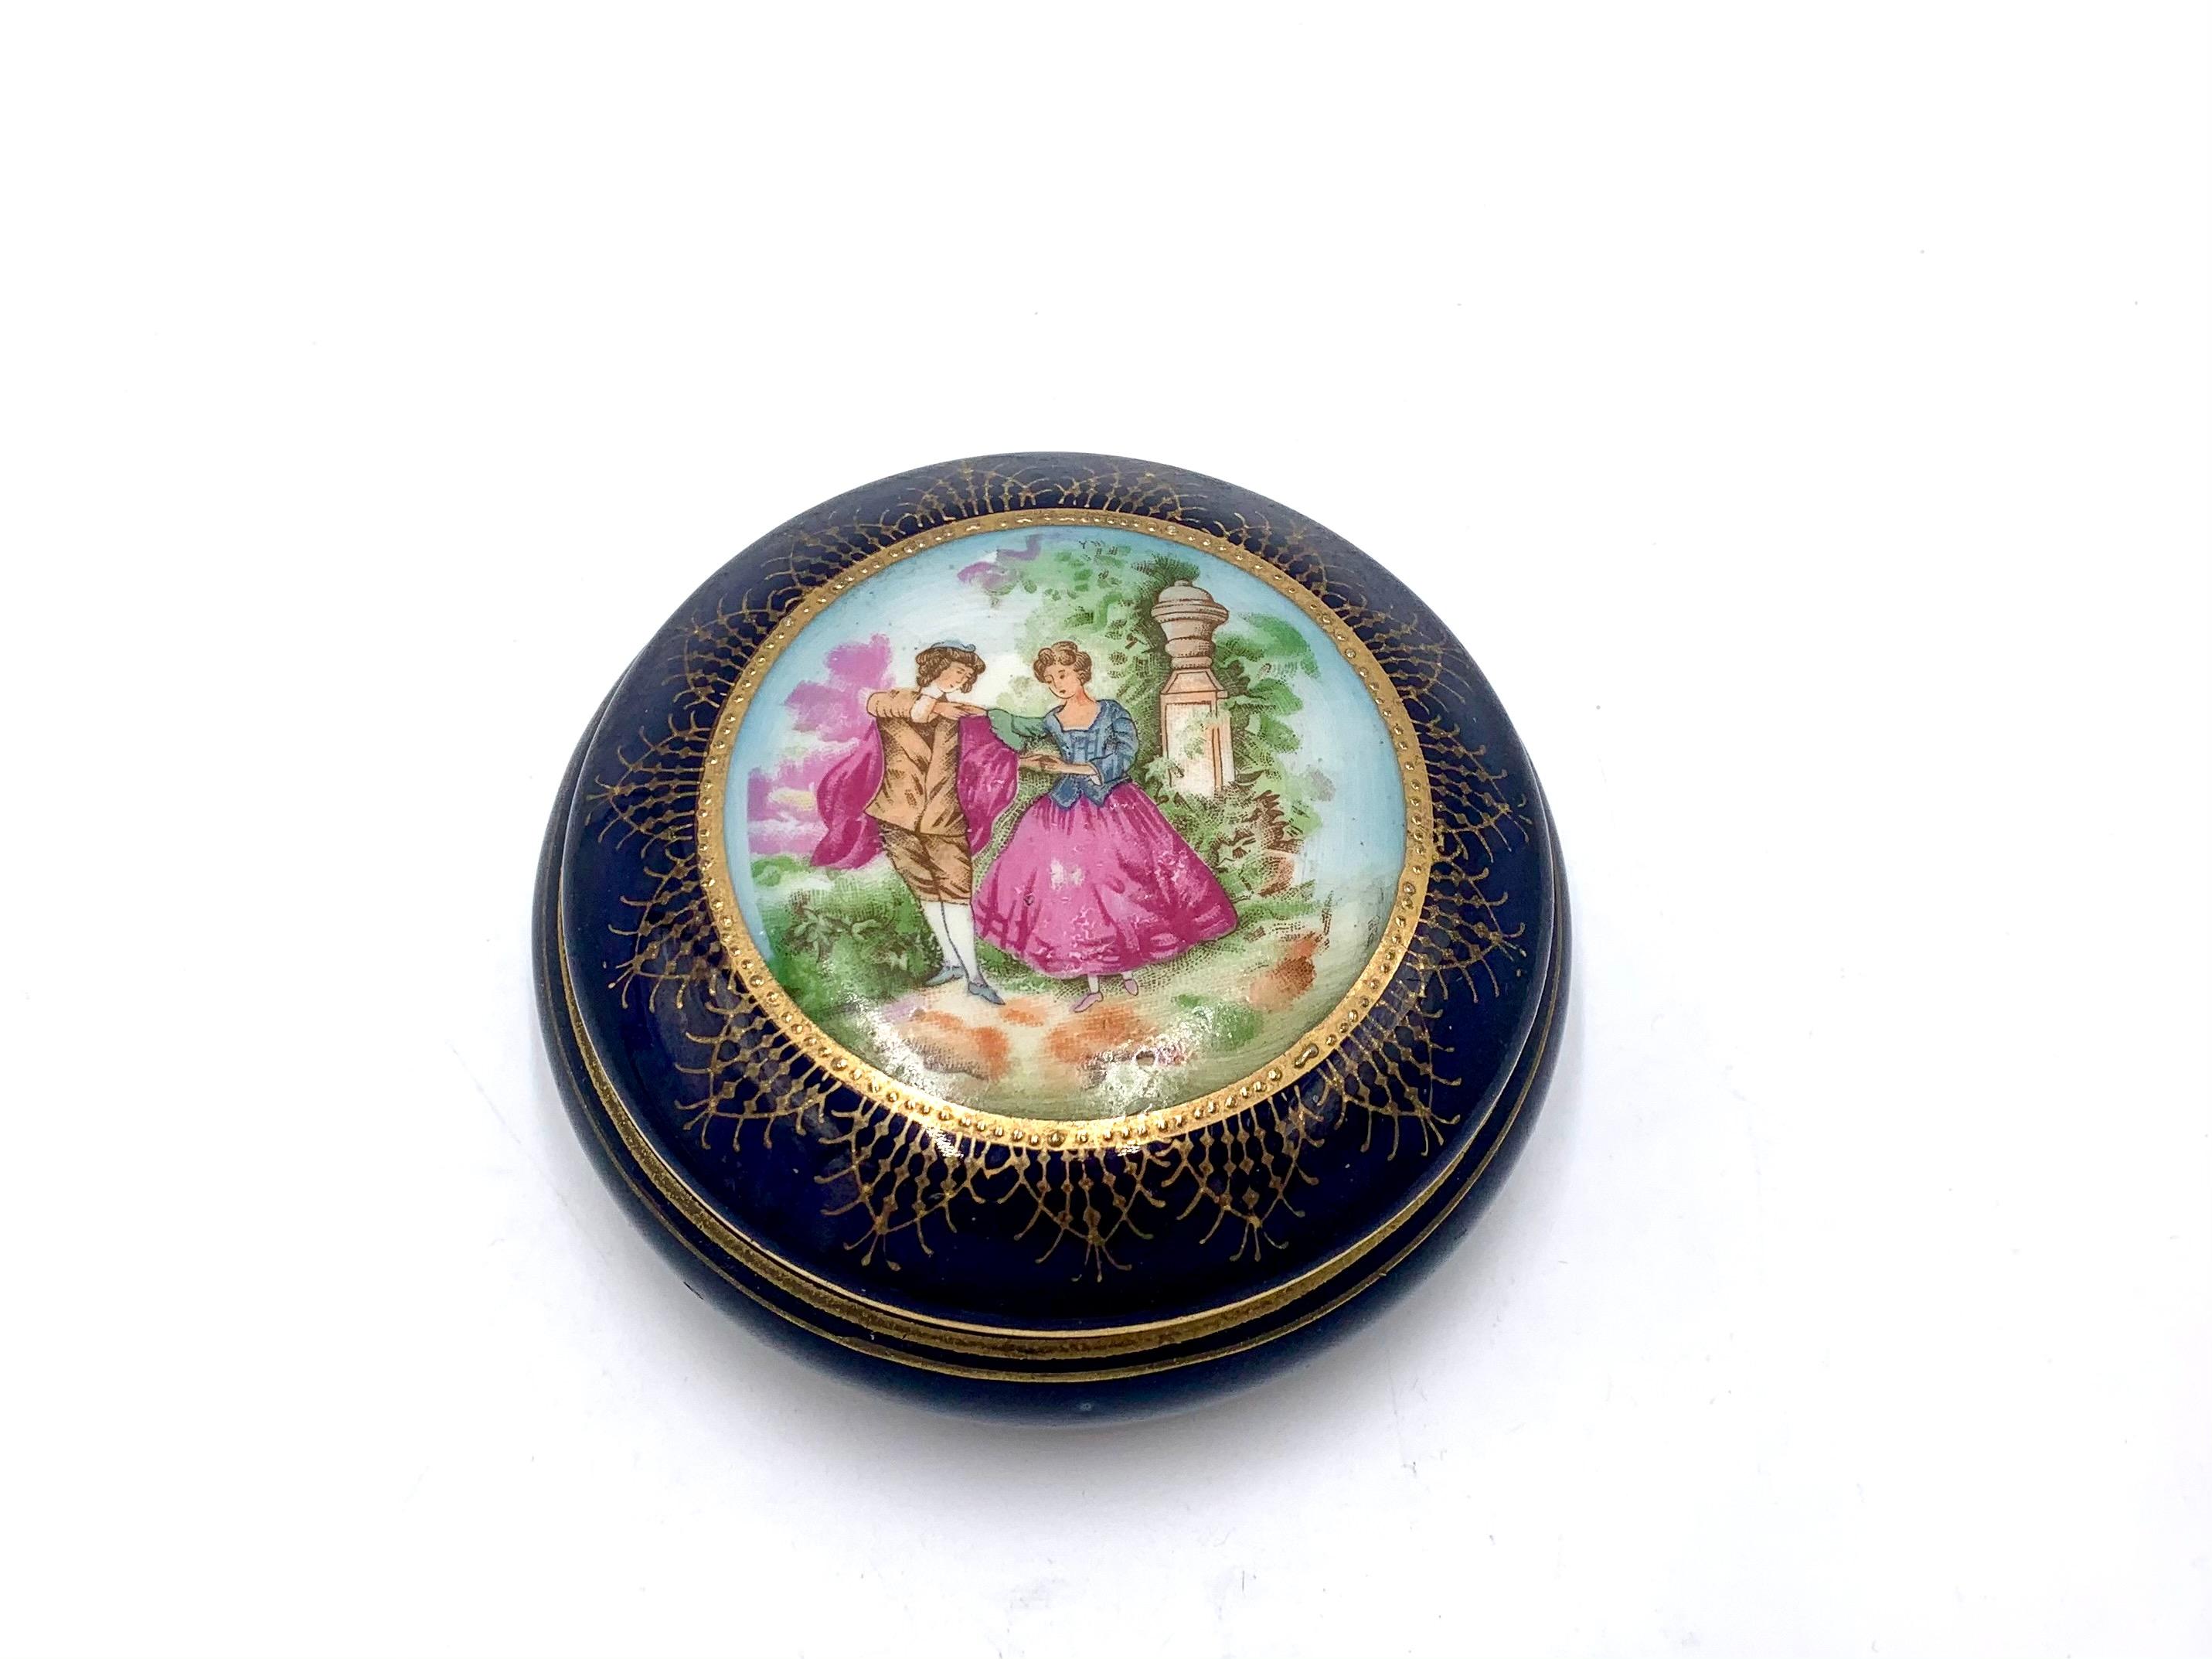 Baroque Porcelain Casket with a Genre Scene For Sale